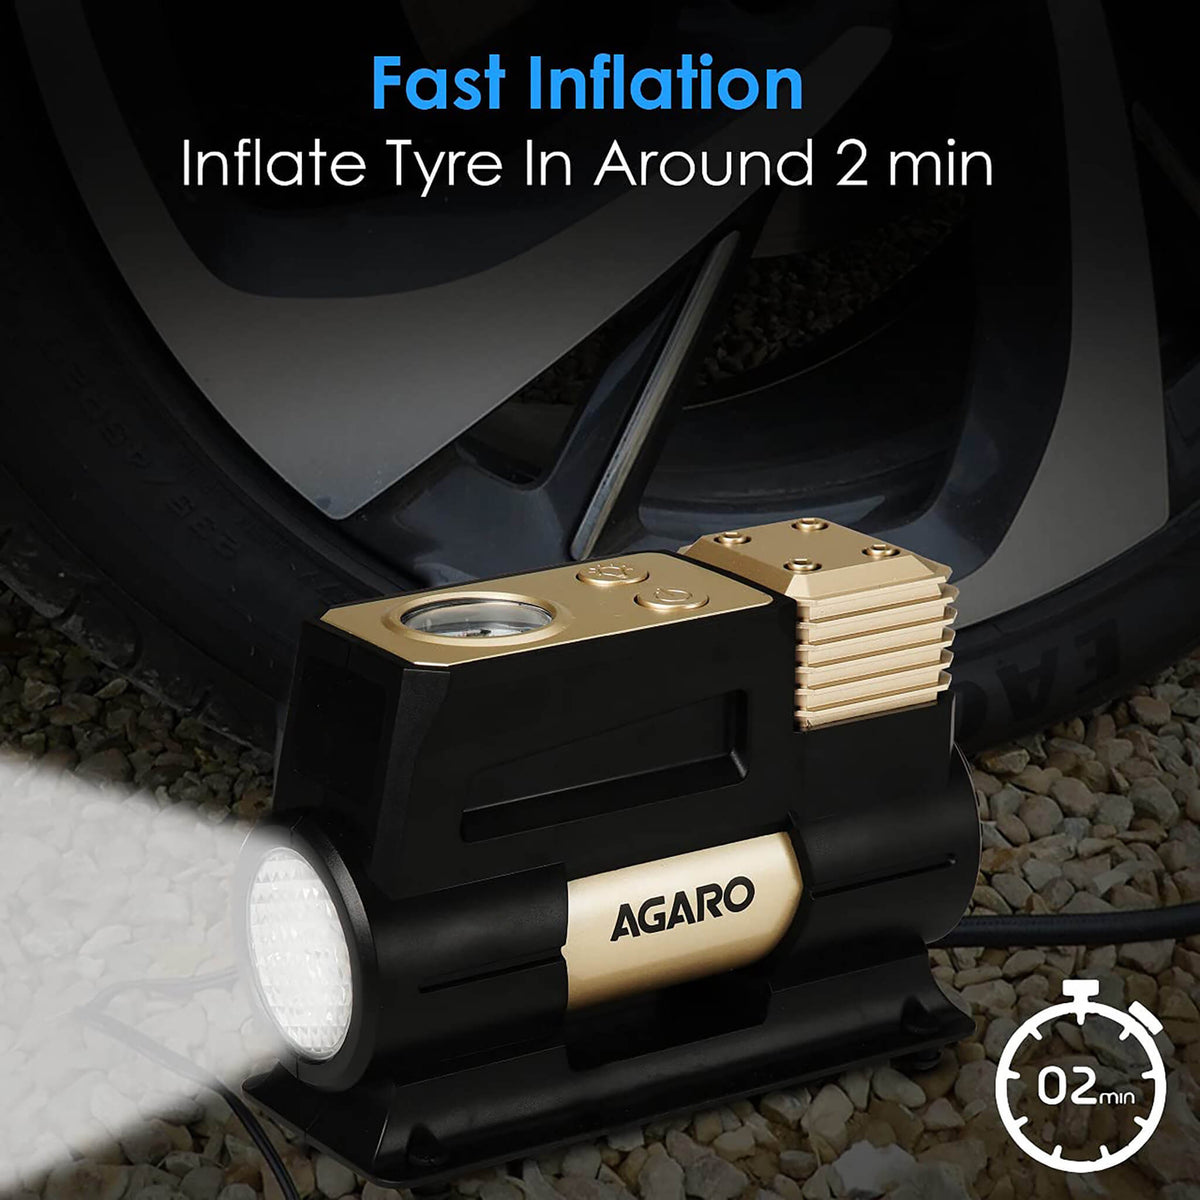 AGARO Force Analog tyre inflator with Emergency Light, 150 watts